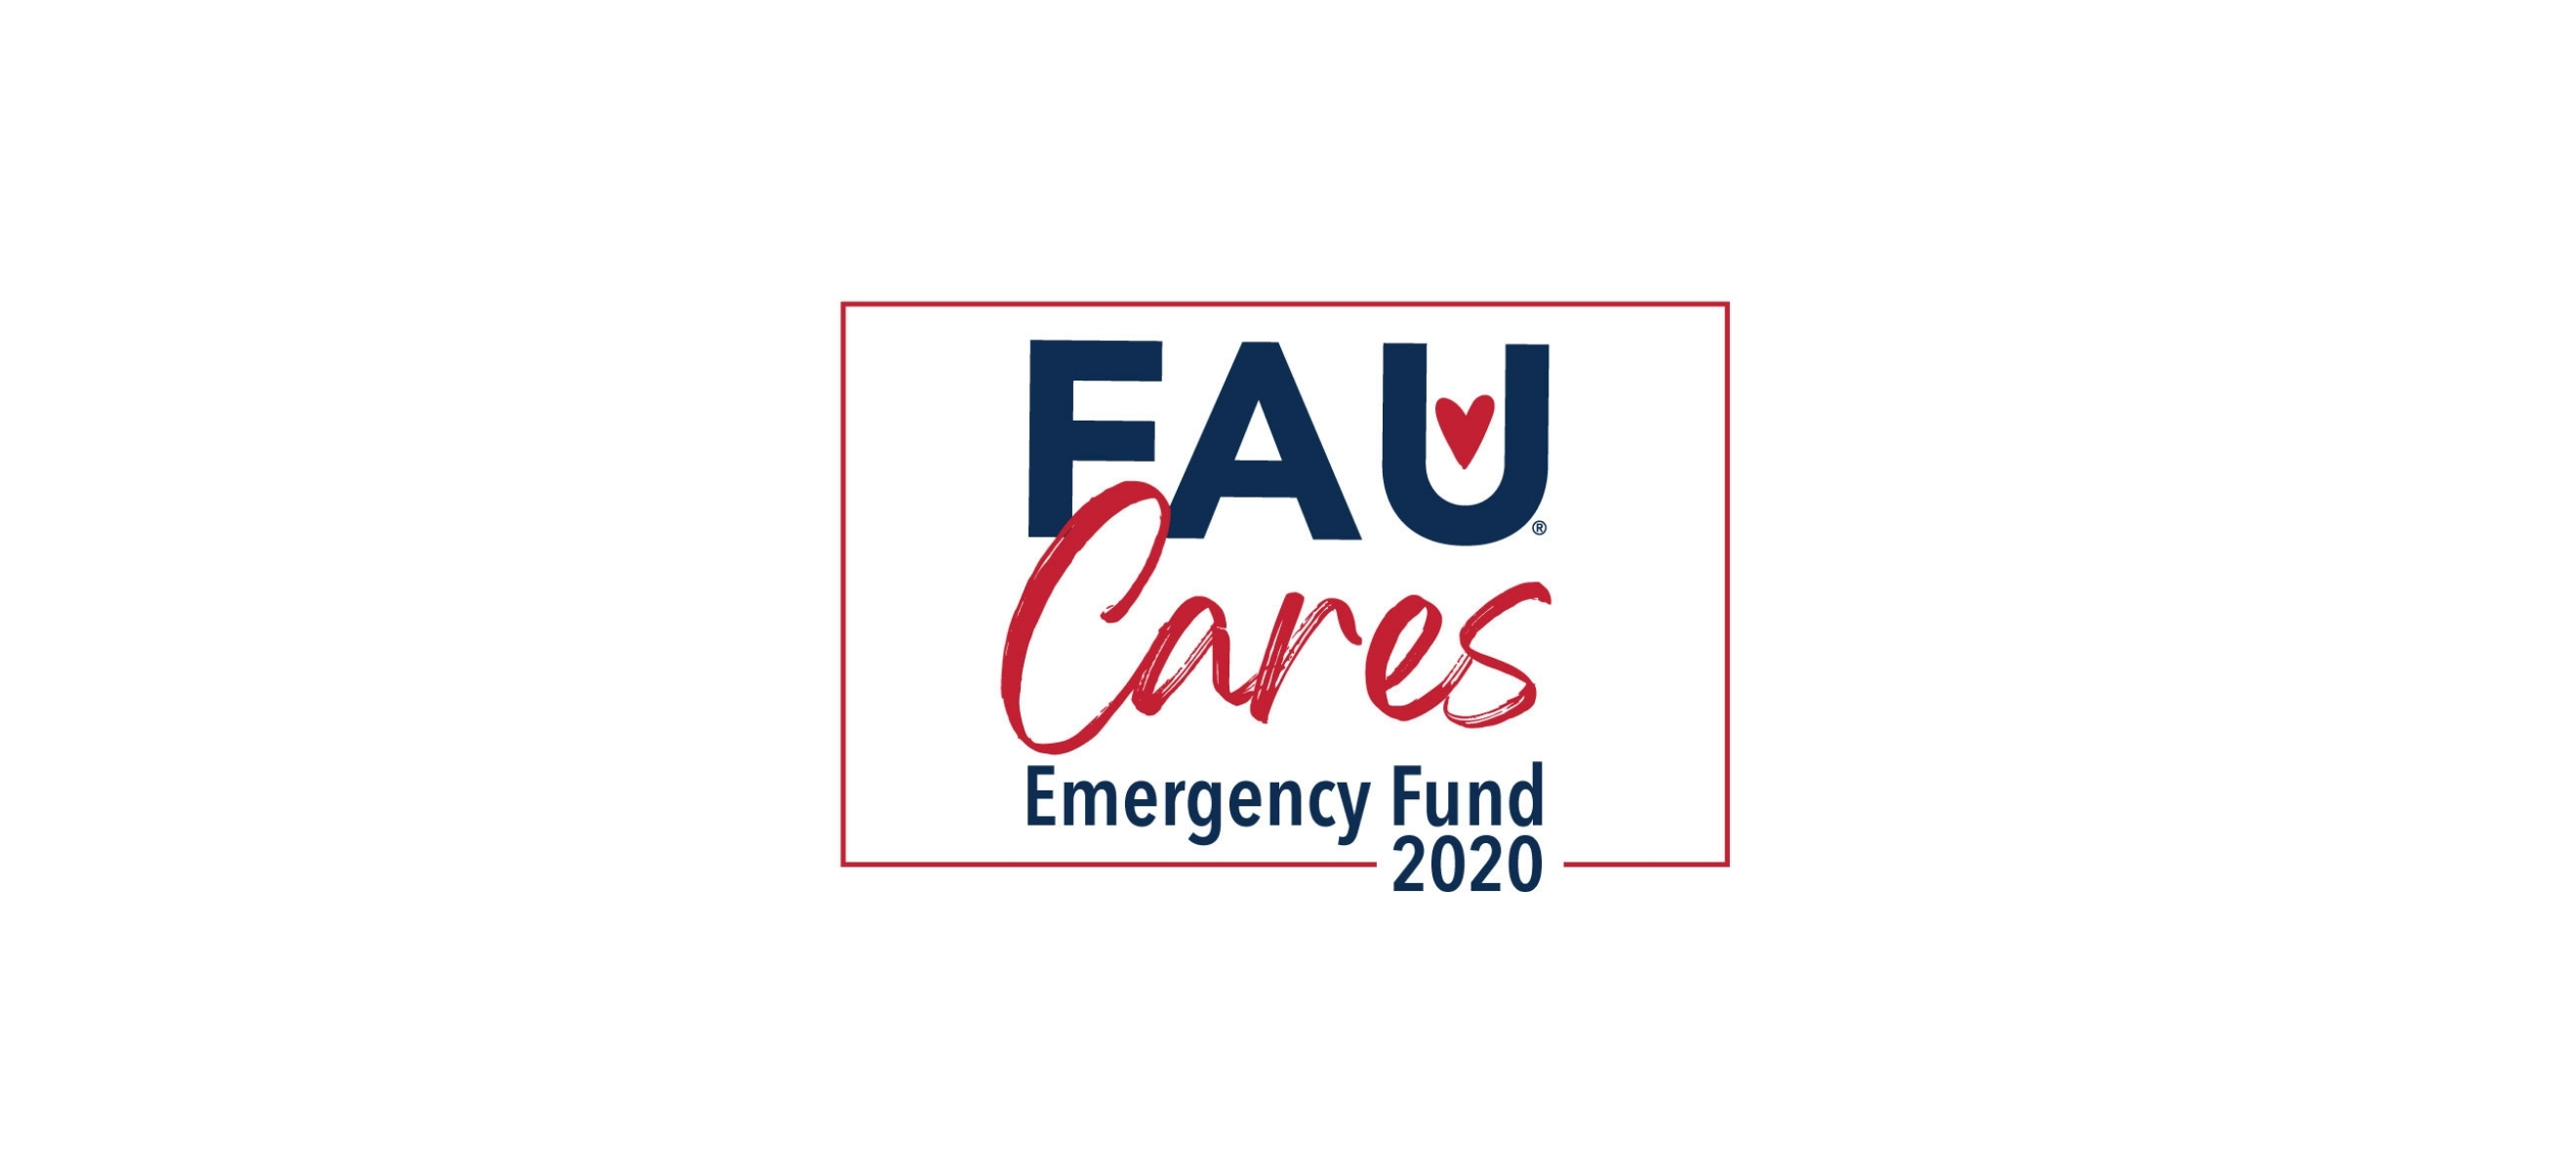 Top Recipient of FAU Cares Funding: Social Work & Criminal Justice